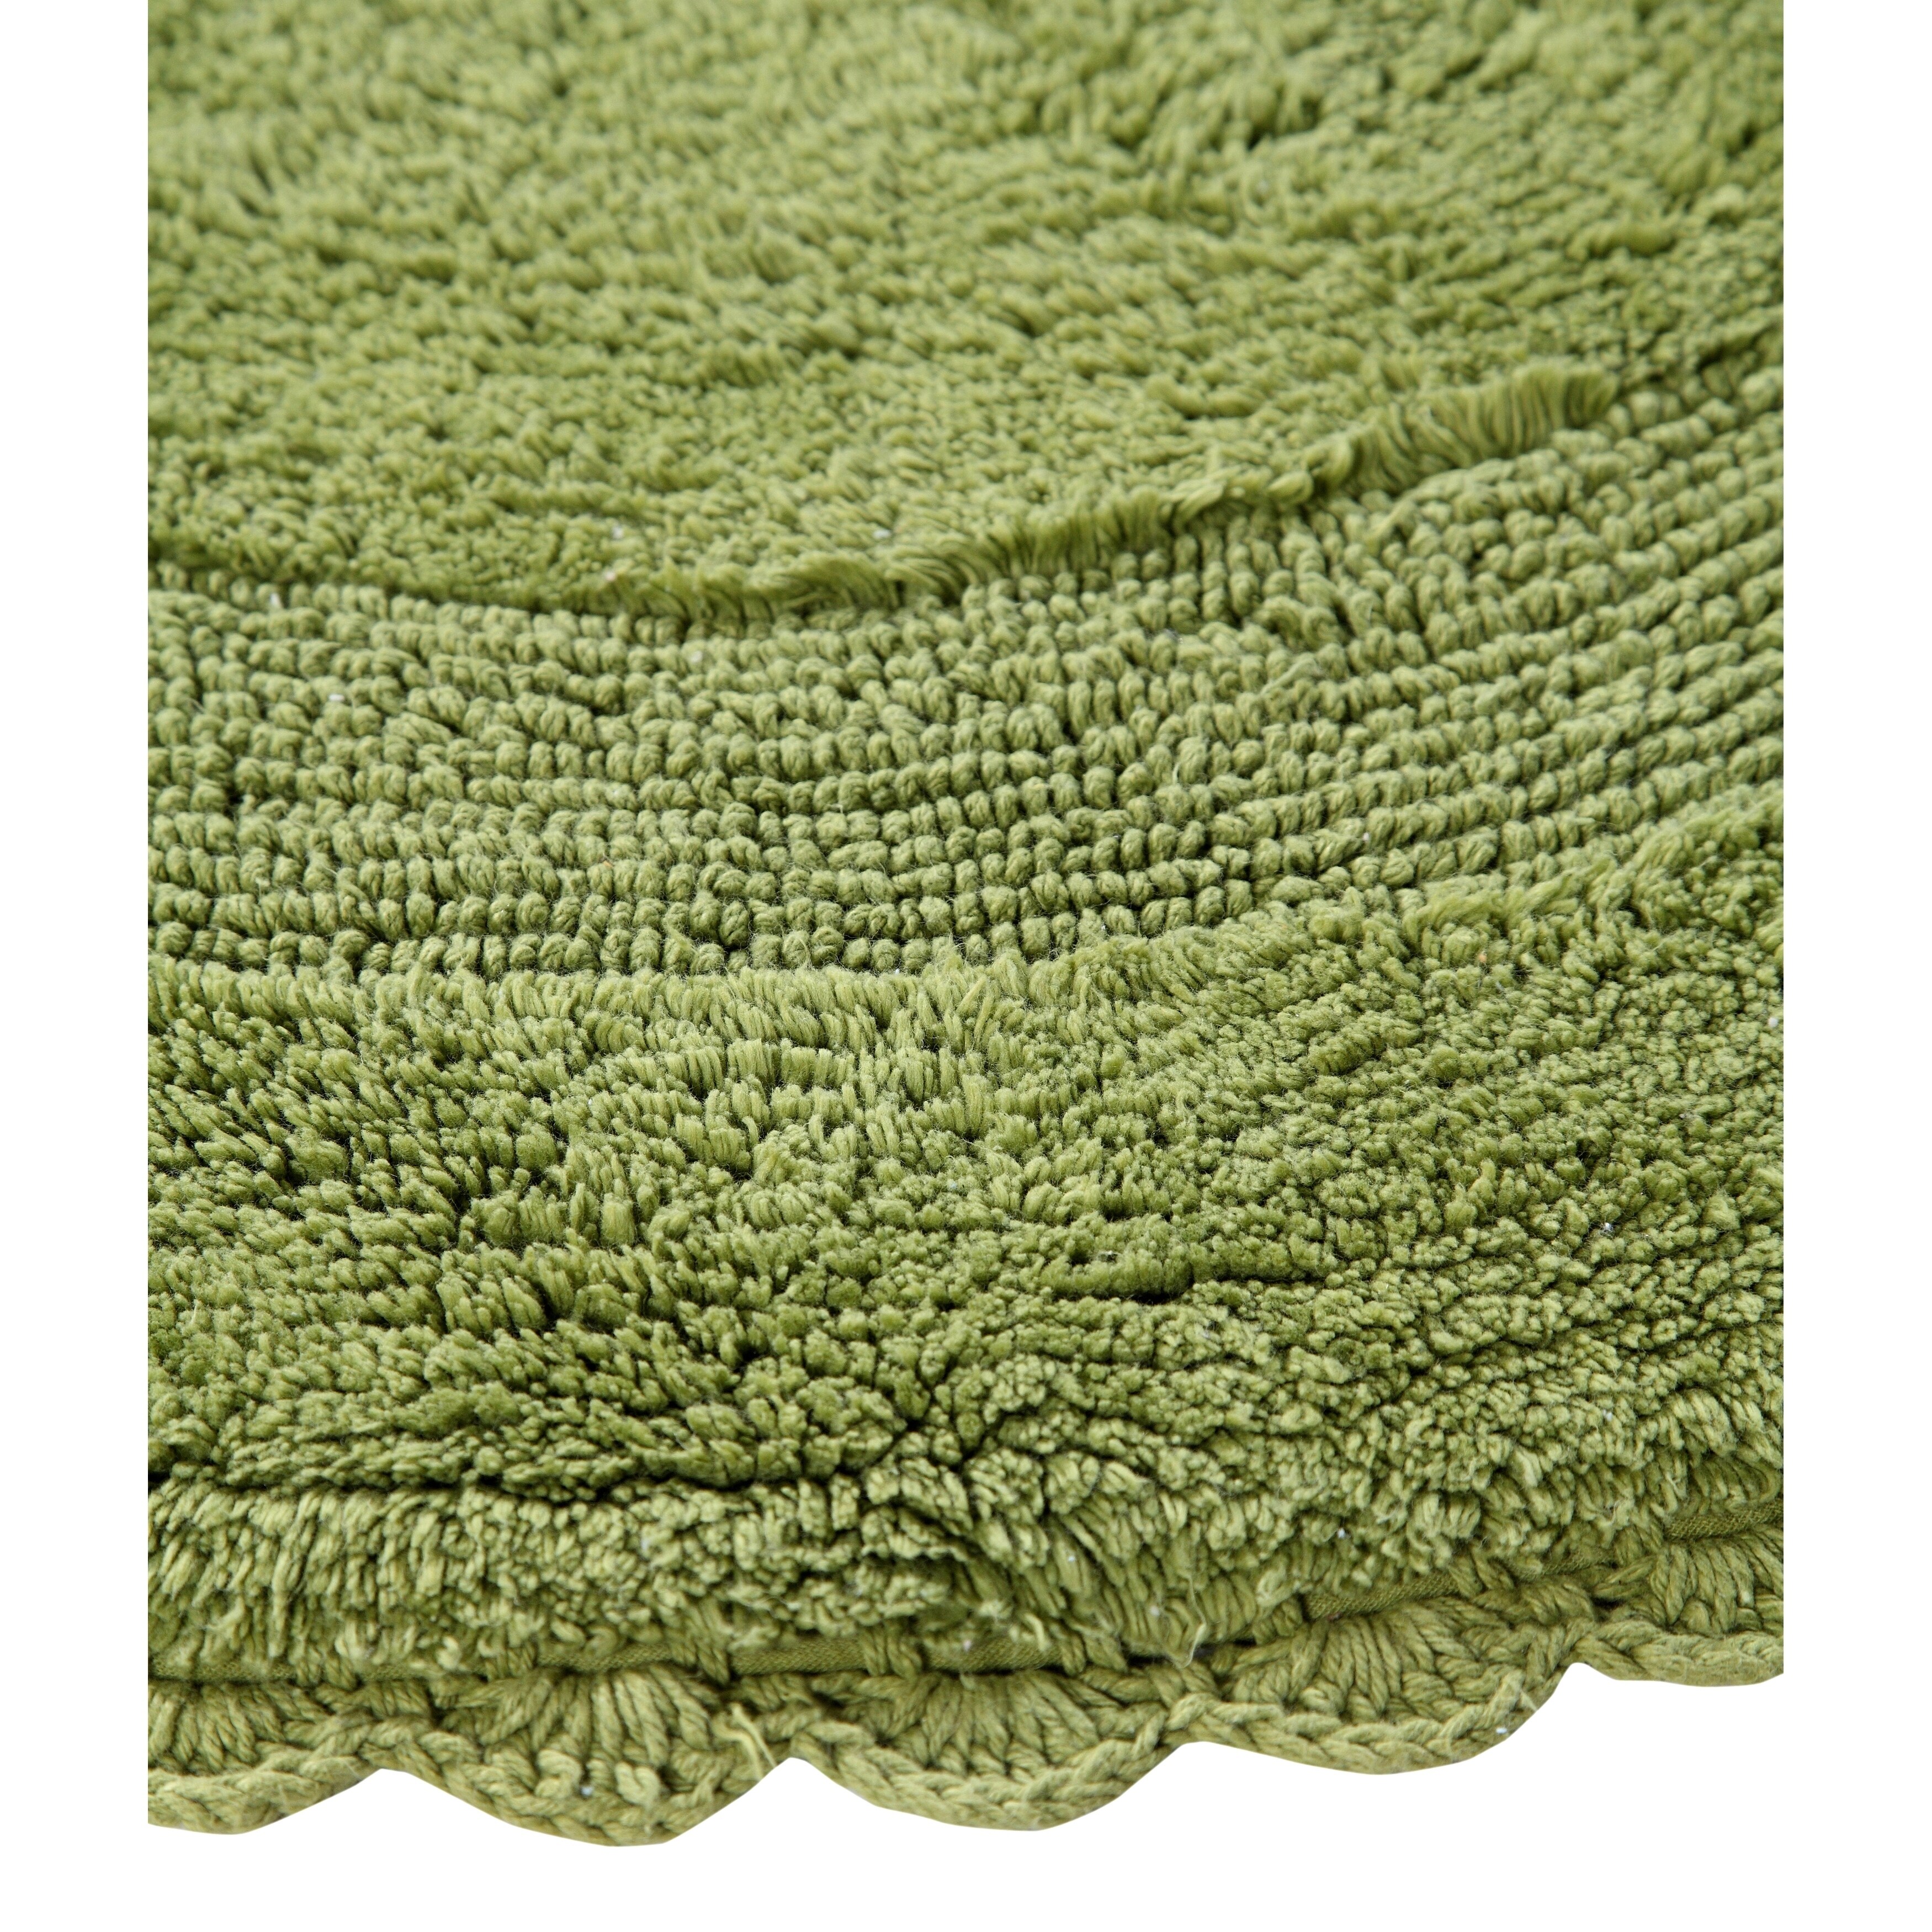 Crochet Lace Border Sage Green Bath Rug Cotton 36 Inch Round Reversible 